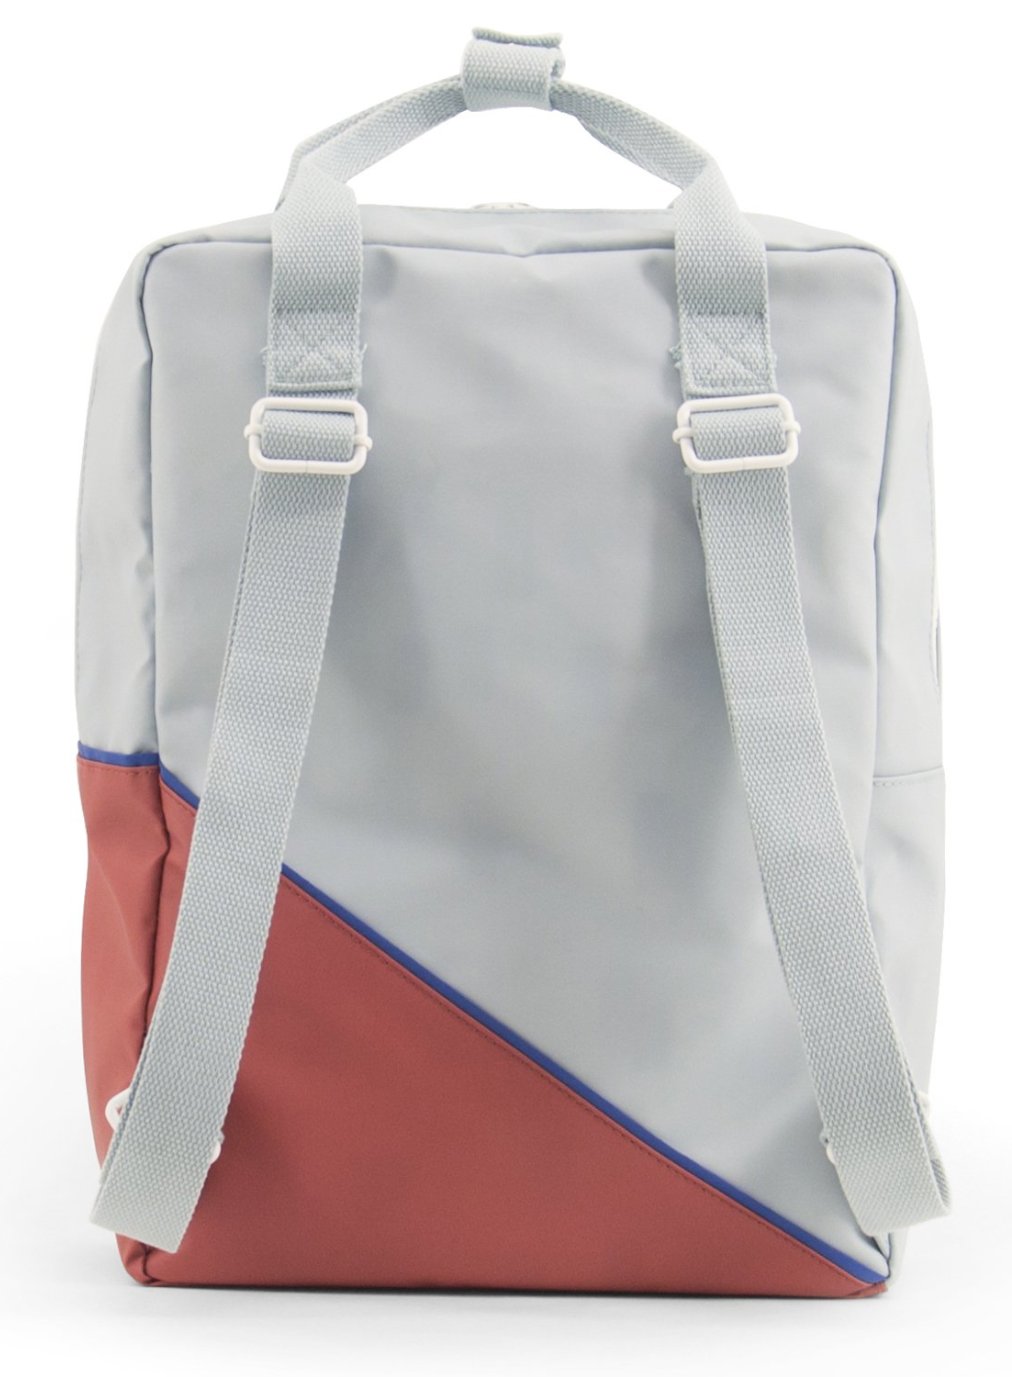 Large backpack diagonal powder blue / faded red - Sticky Lemon